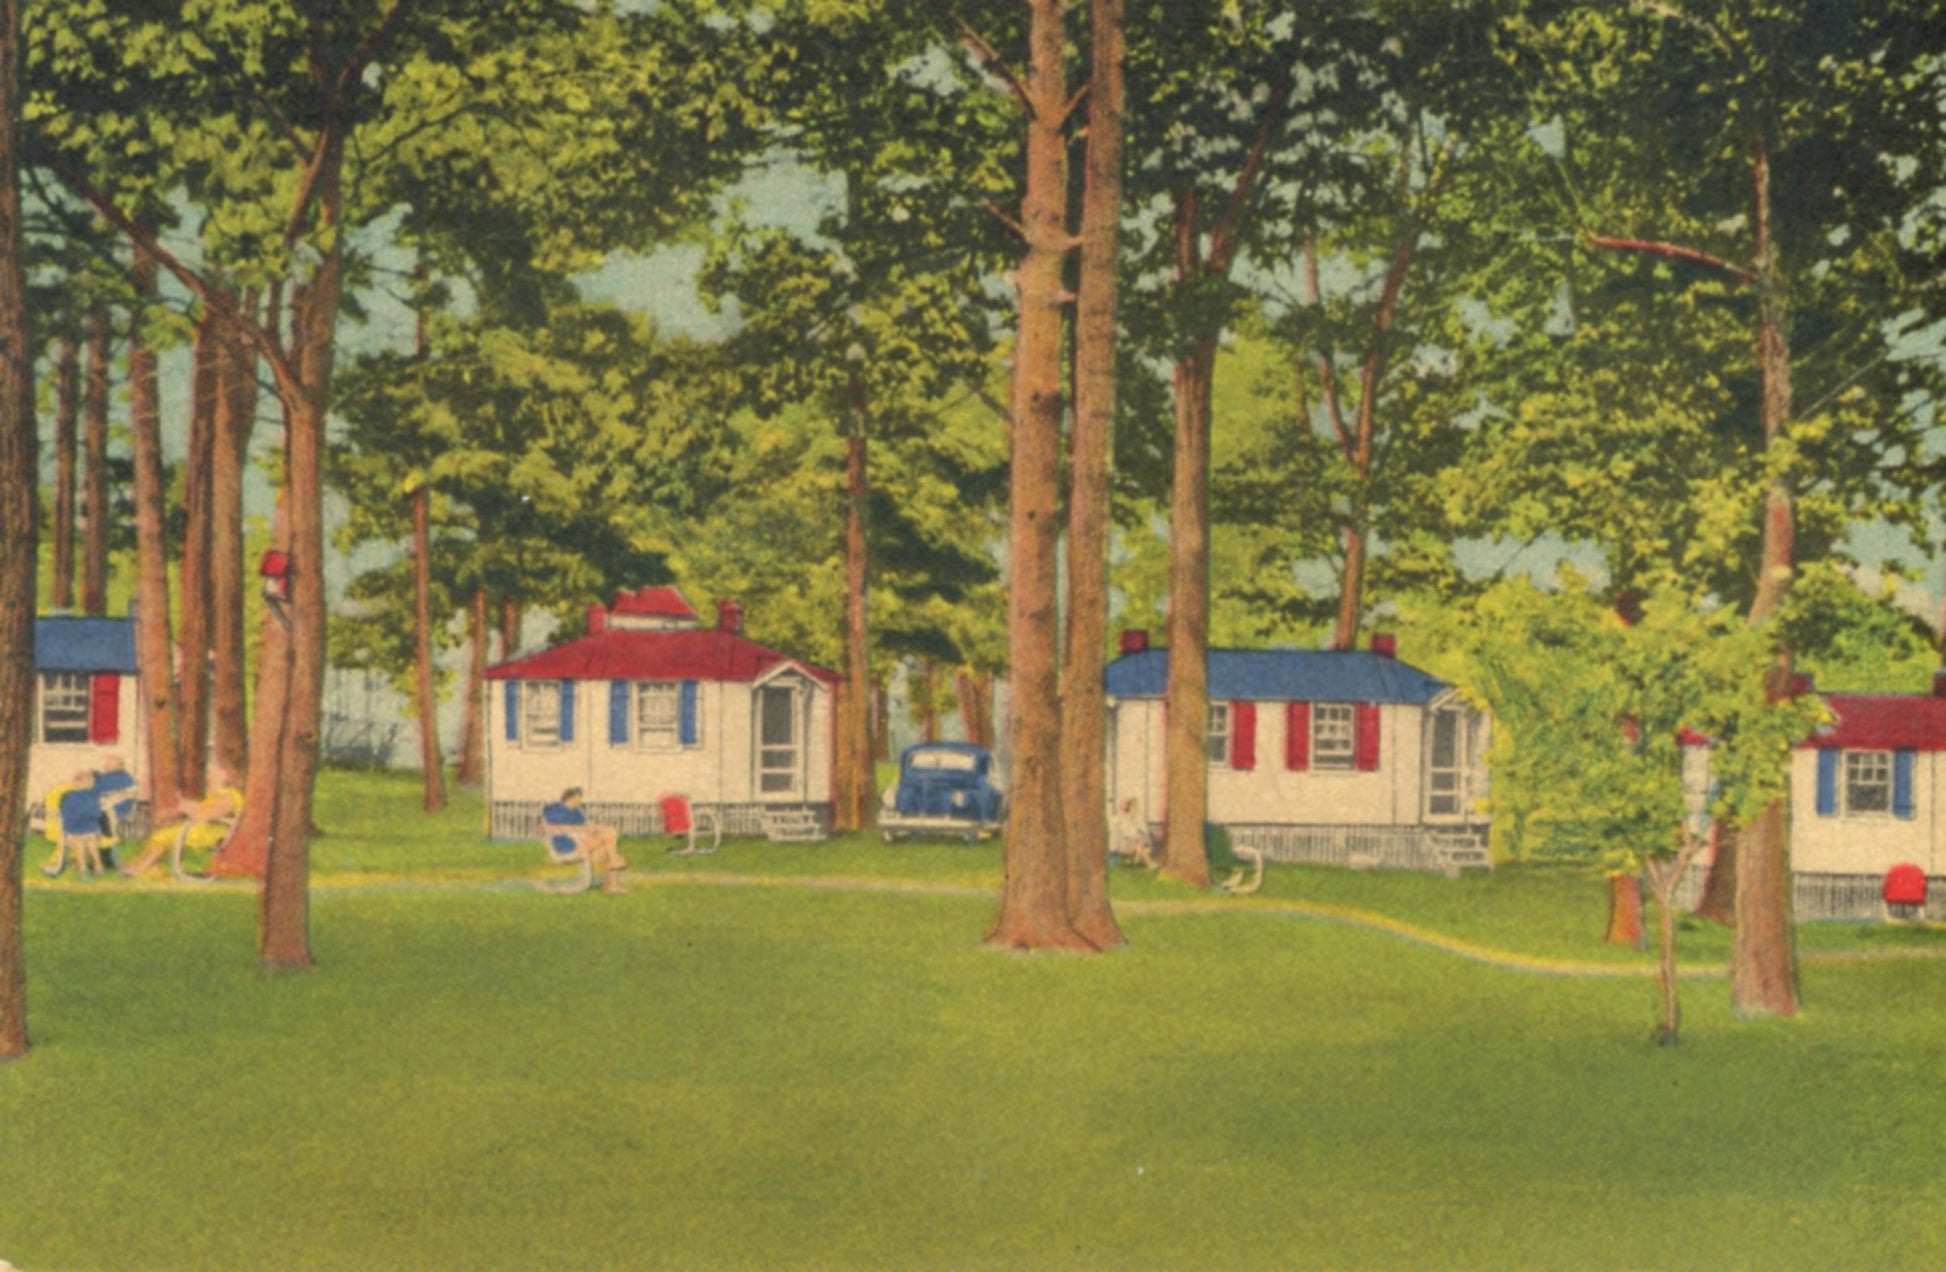 Prospect Point Cabins SPRING LAKE MICHIGAN Vintage Linen Postcard